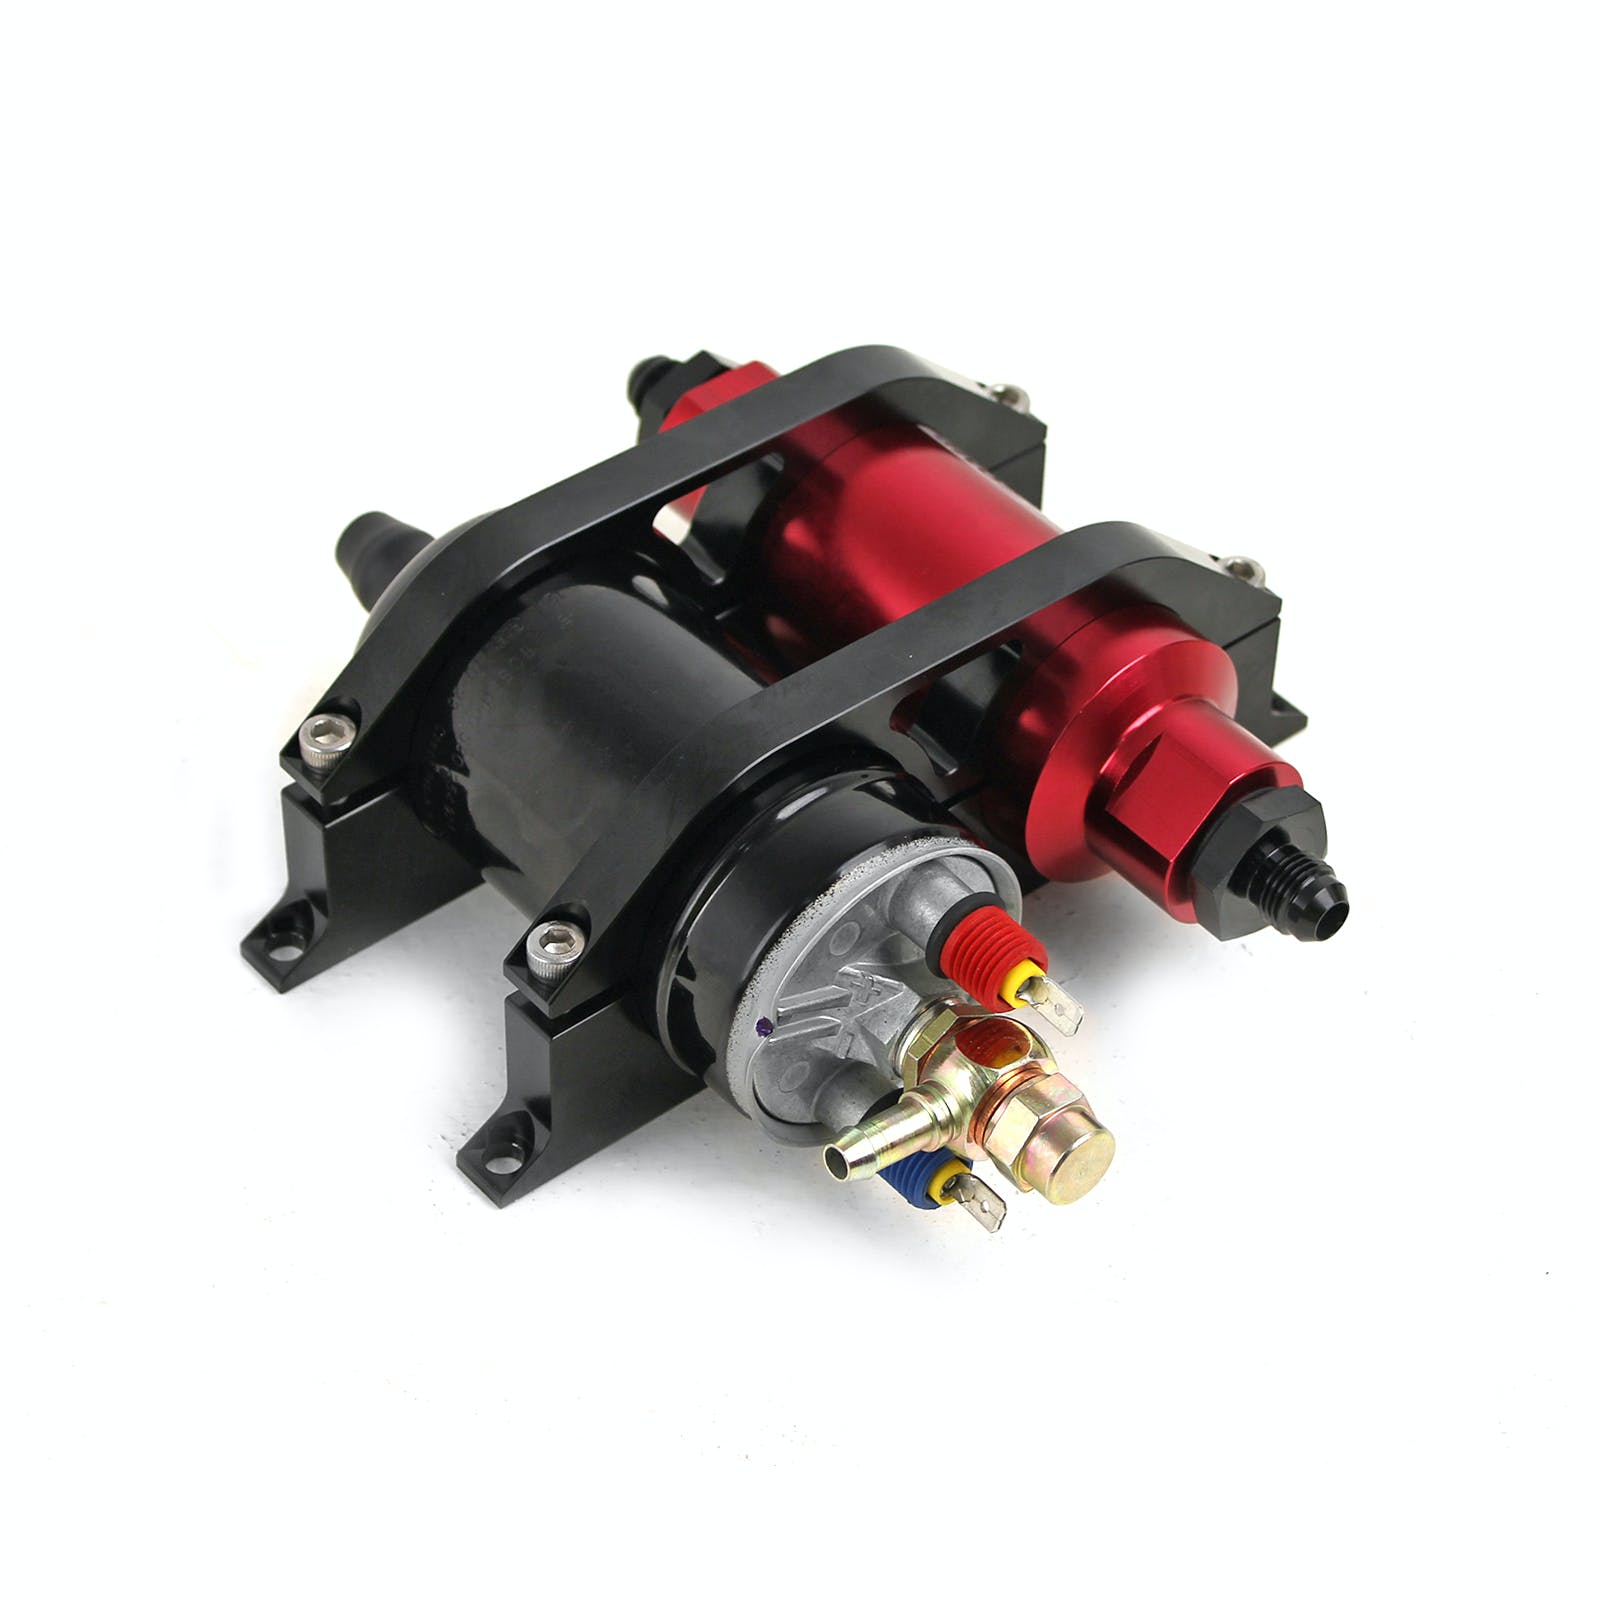 Speedmaster PCE142.1005 Fuel Pump and Filter Dual Mounting Bracket Set Black Anodized Aluminum